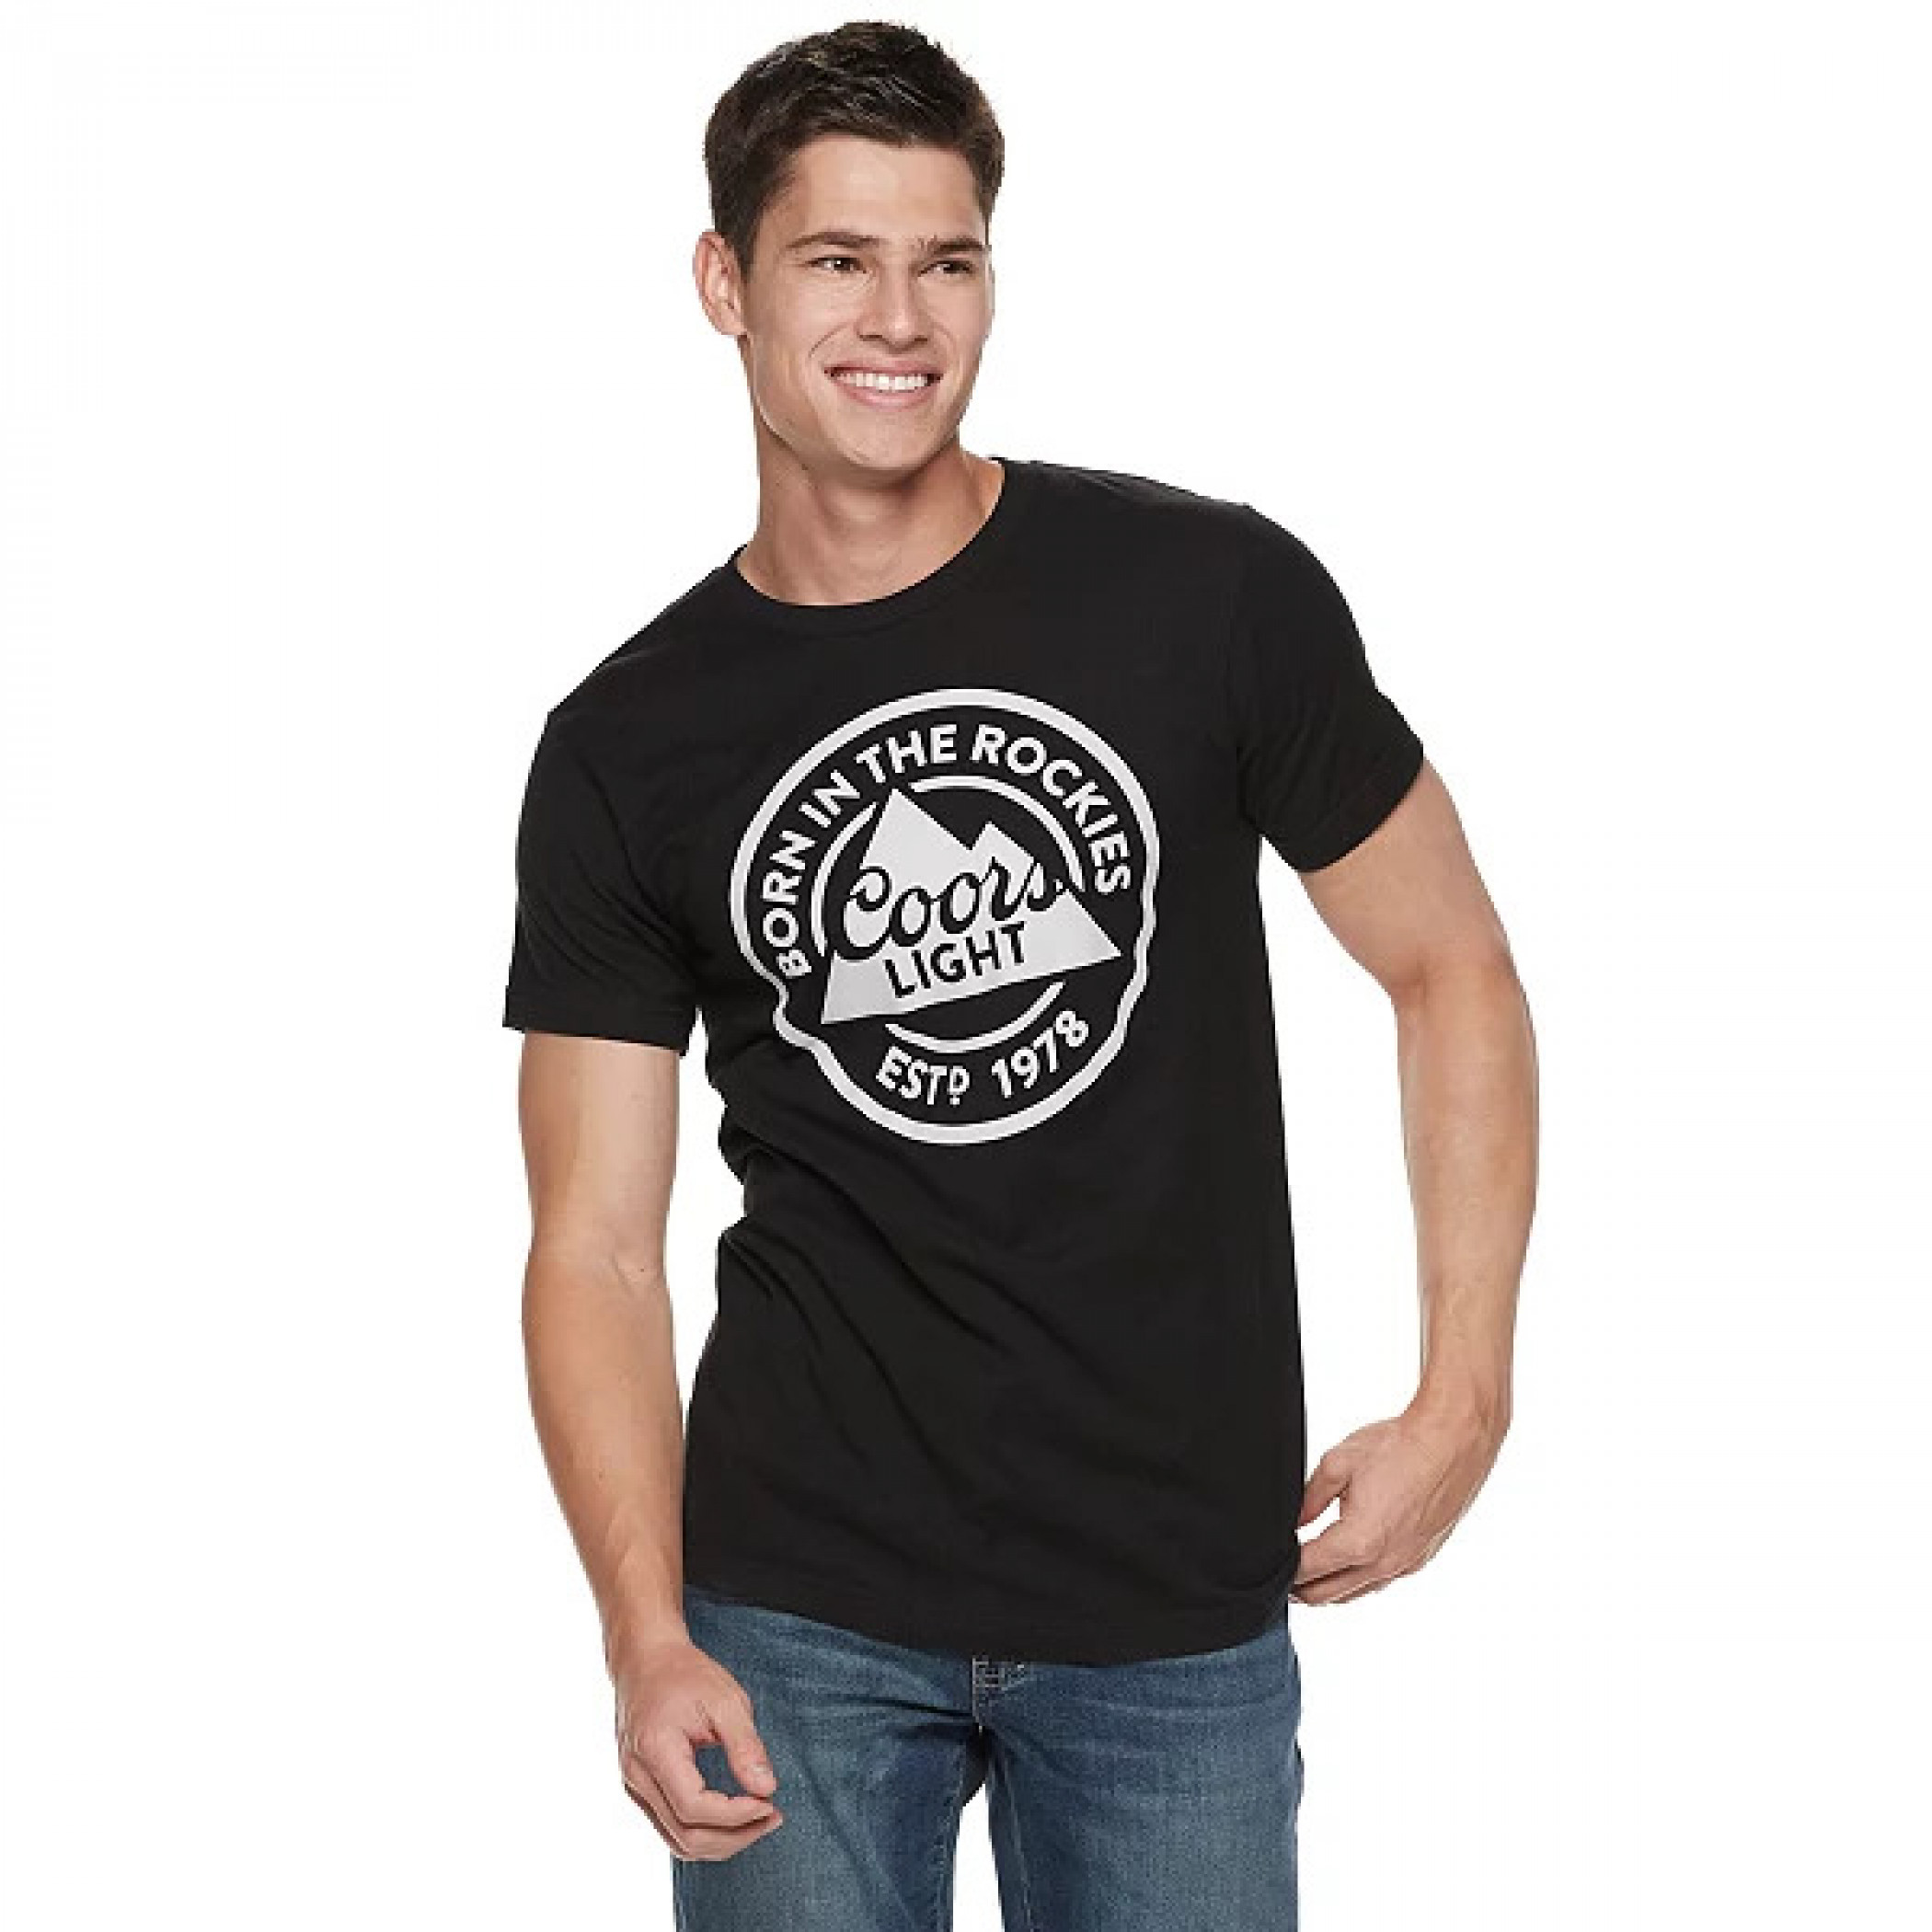 Coors Light Logo Est. 1978 Born in the Rockies T-Shirt